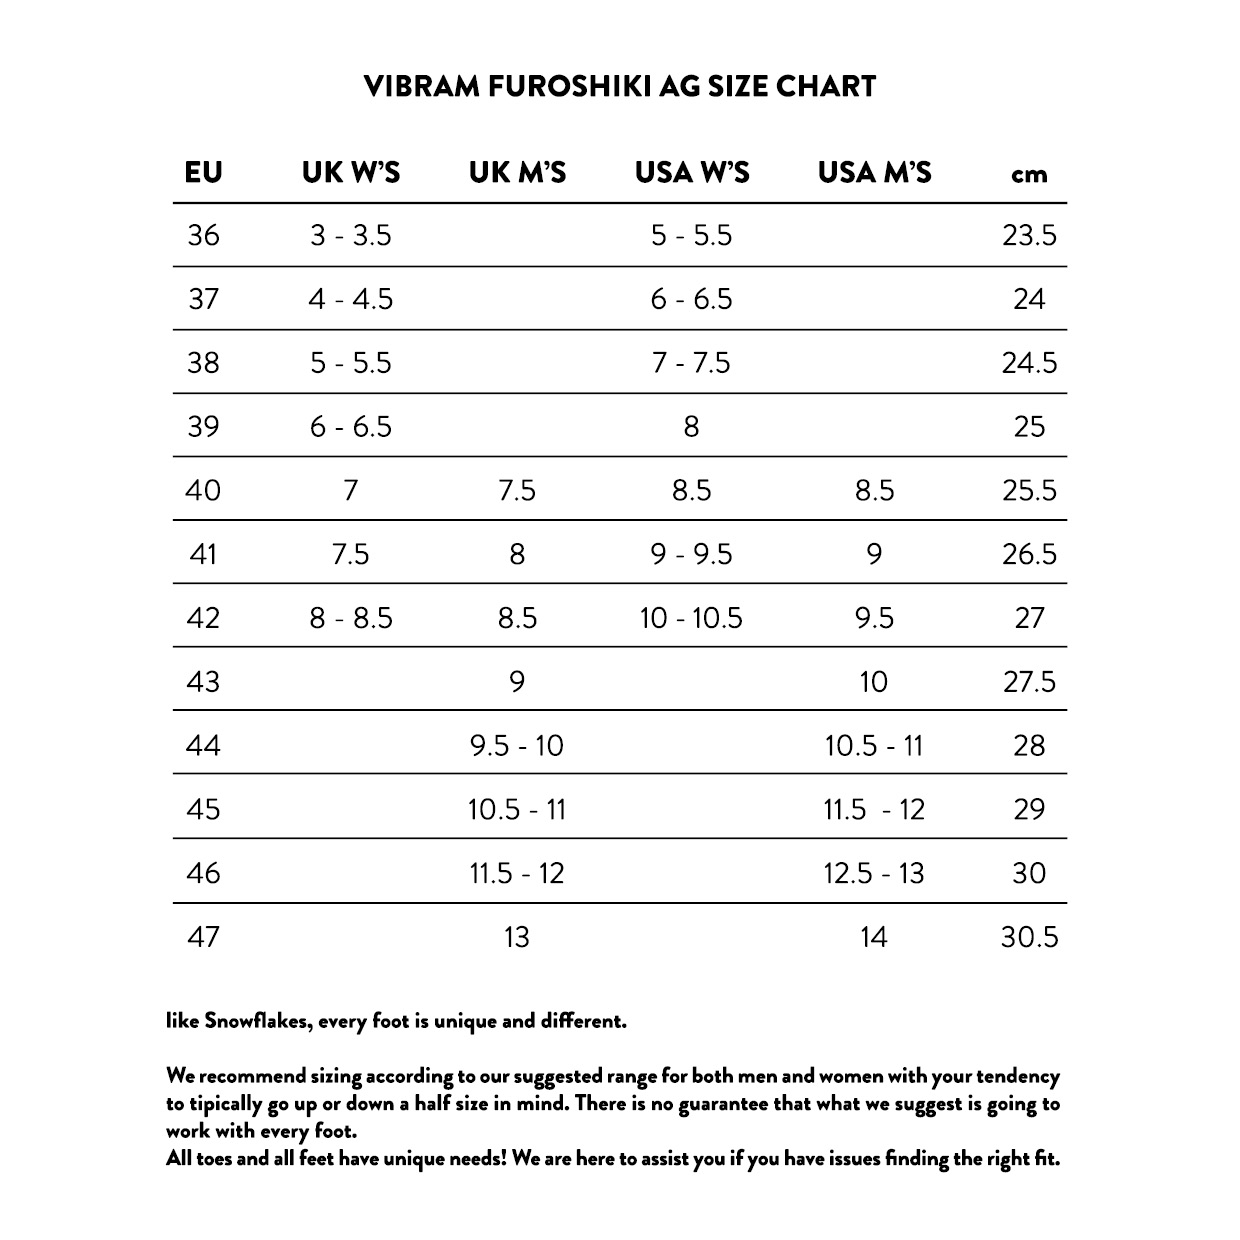 Vibram Furoshiki Sizing Chart - Original